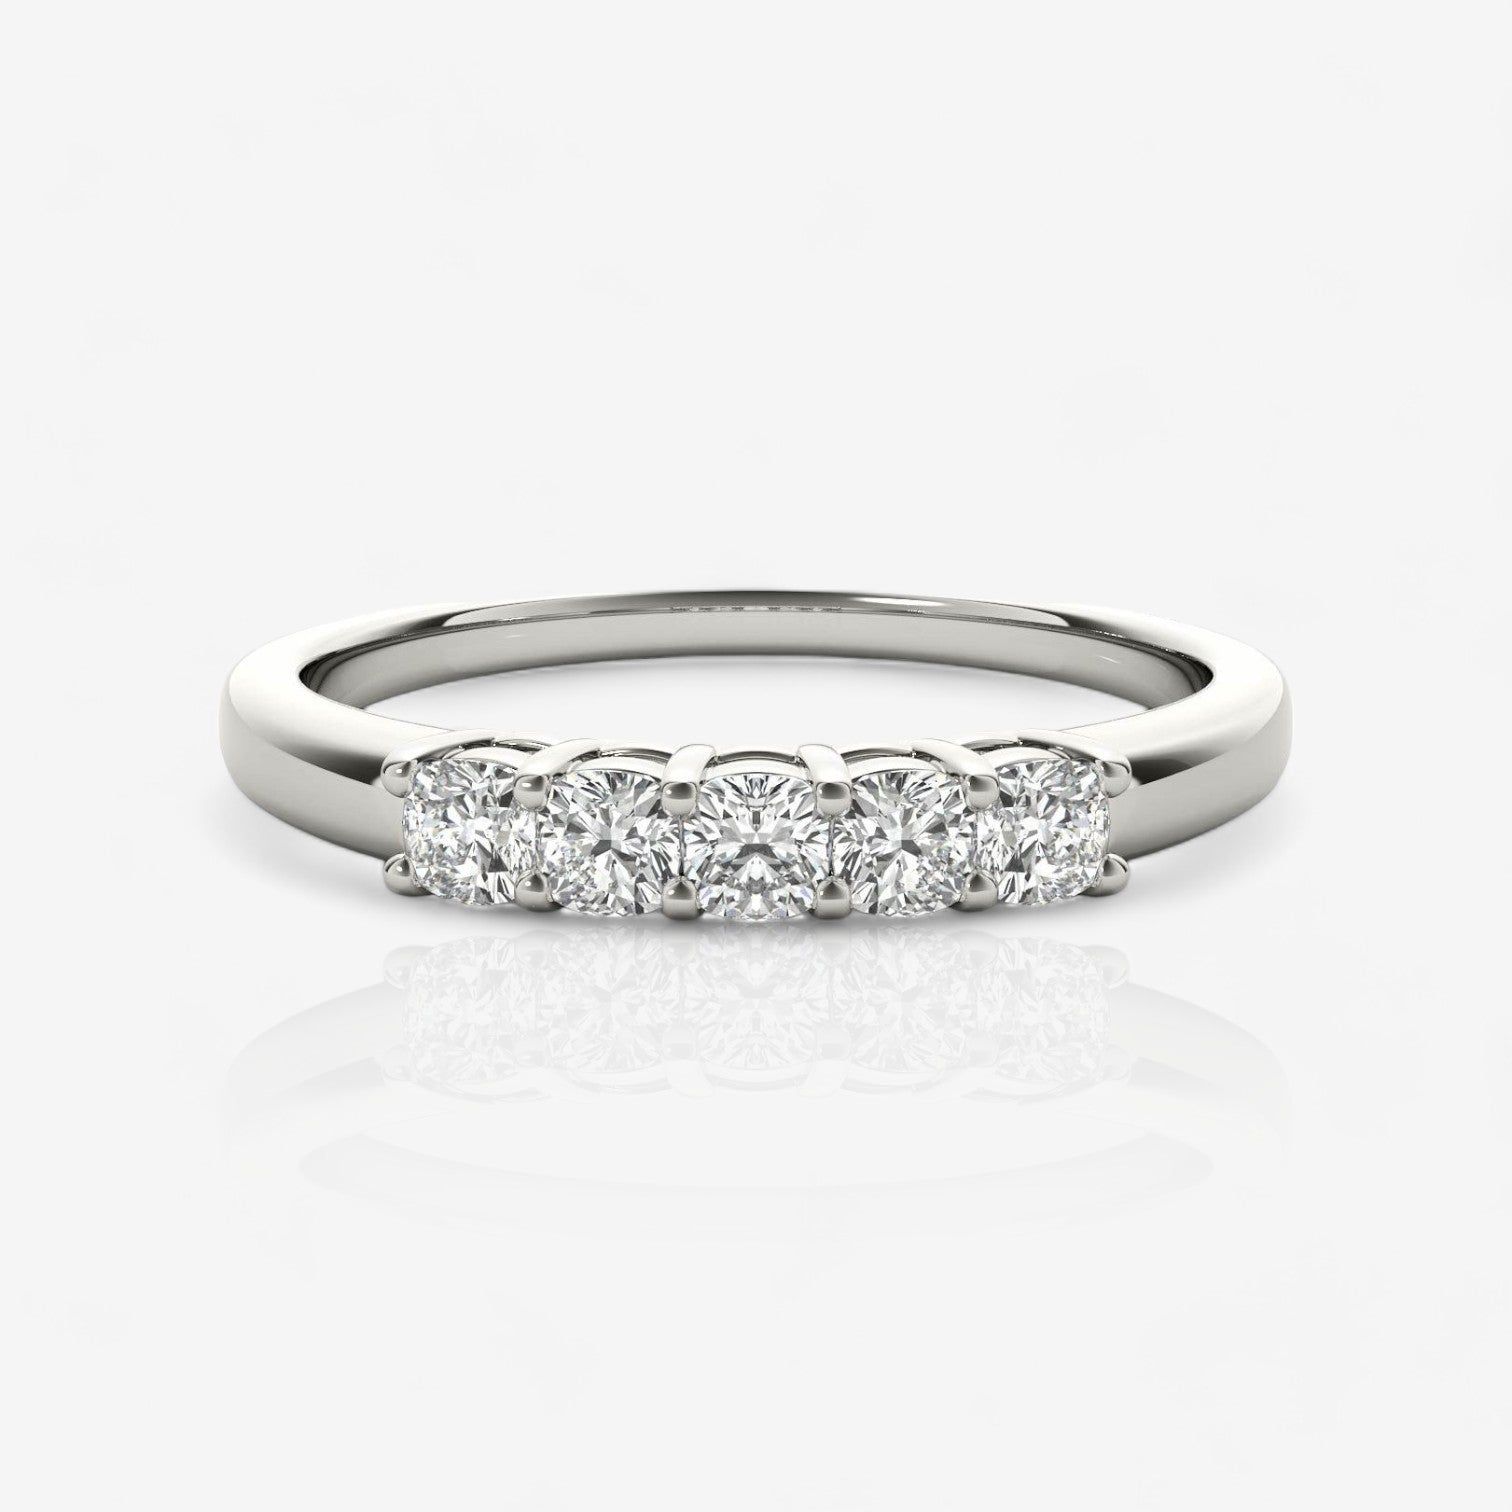 Five-Stone Cushion Cut Diamond Wedding Ring